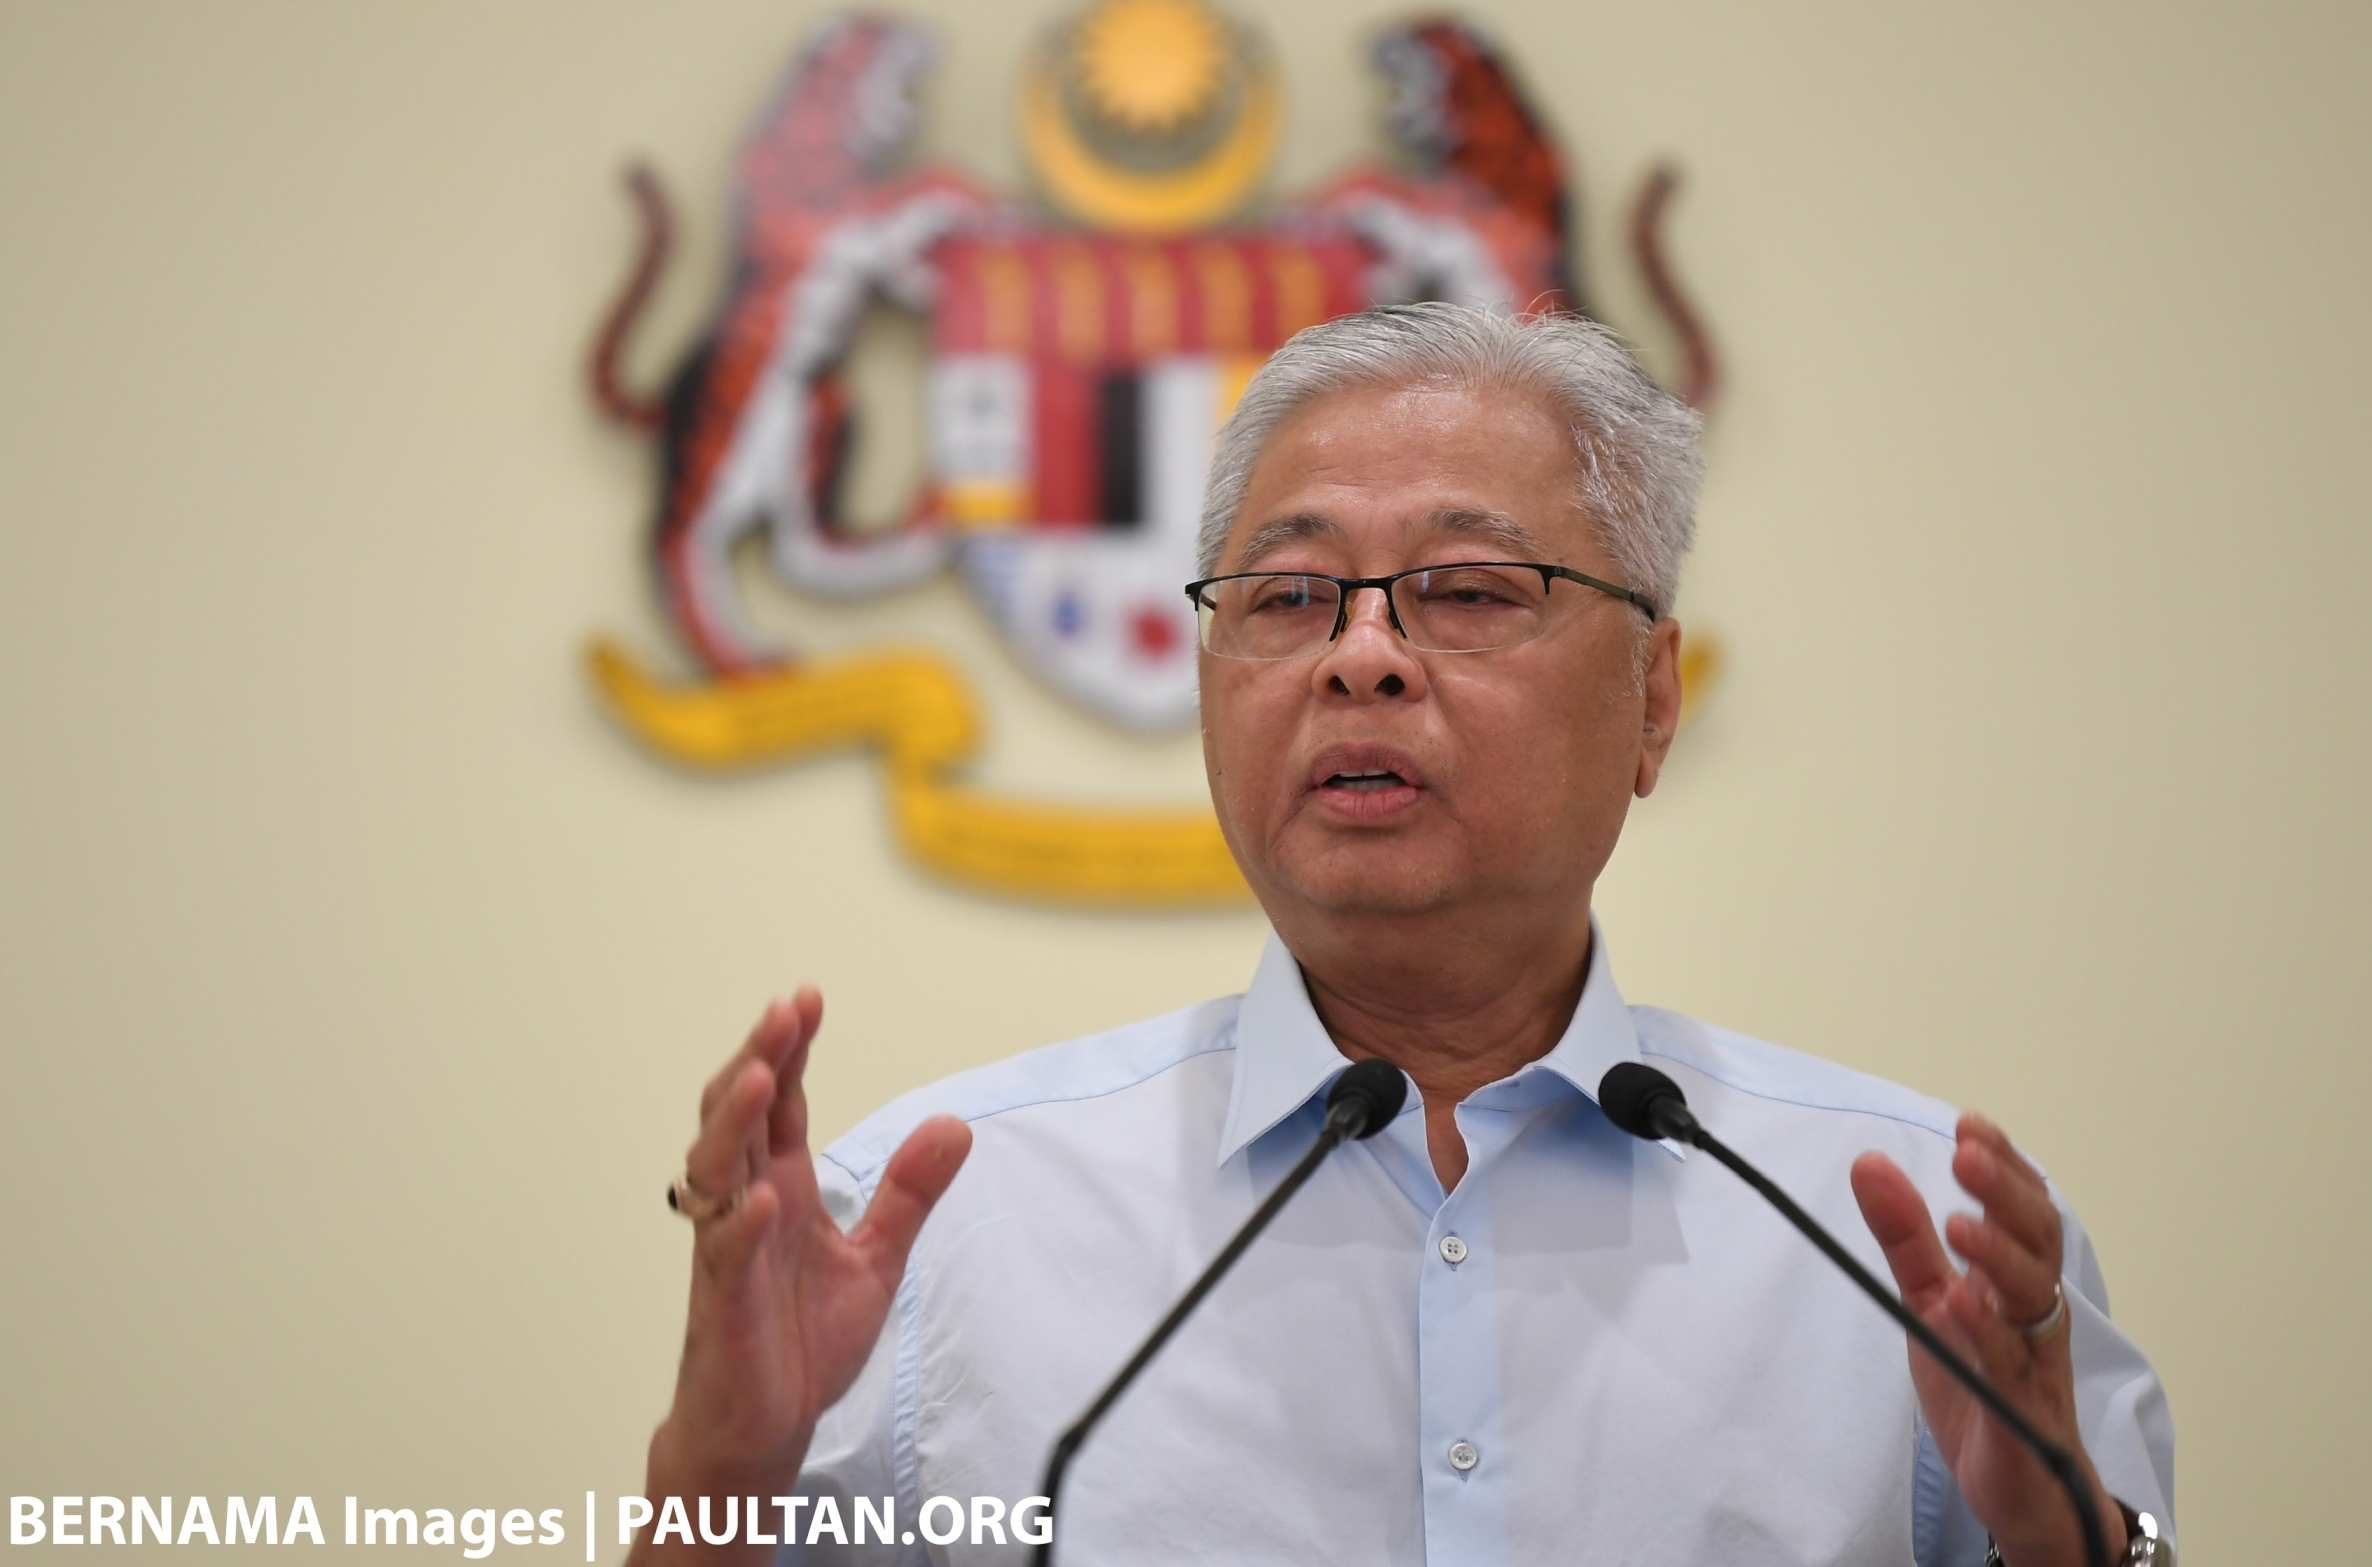 Menteri sahkan rempuhan di Tambak Johor adalah berita palsu, individu terlibat sudah dikenalpasti